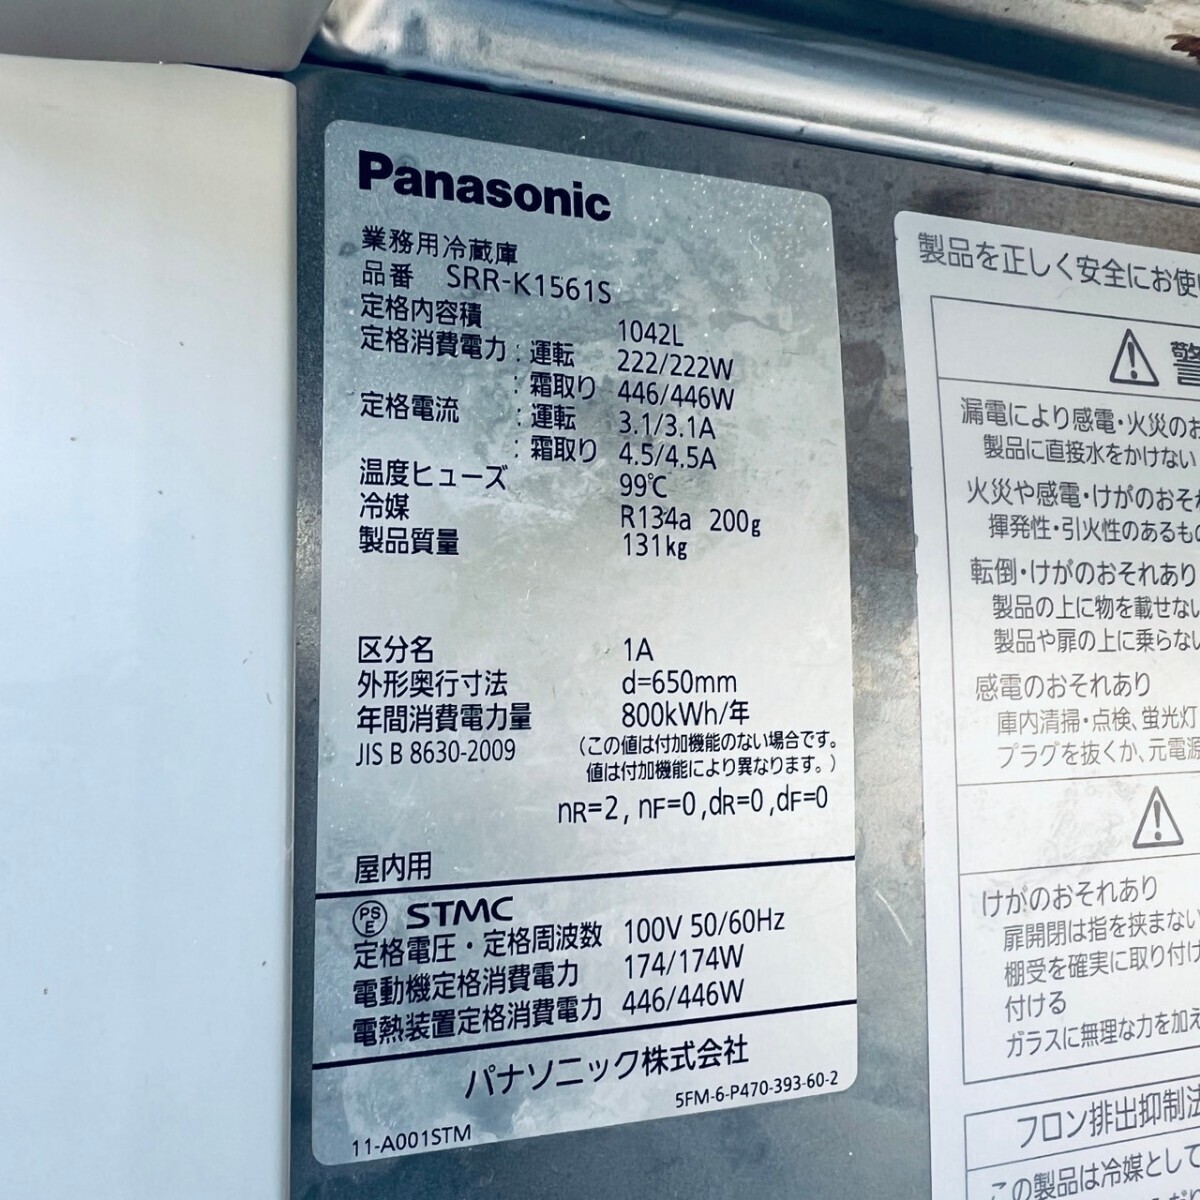 [ direct pick up only. ]Panasonic Panasonic business use business use freezing refrigerator freezing refrigerator freezer 